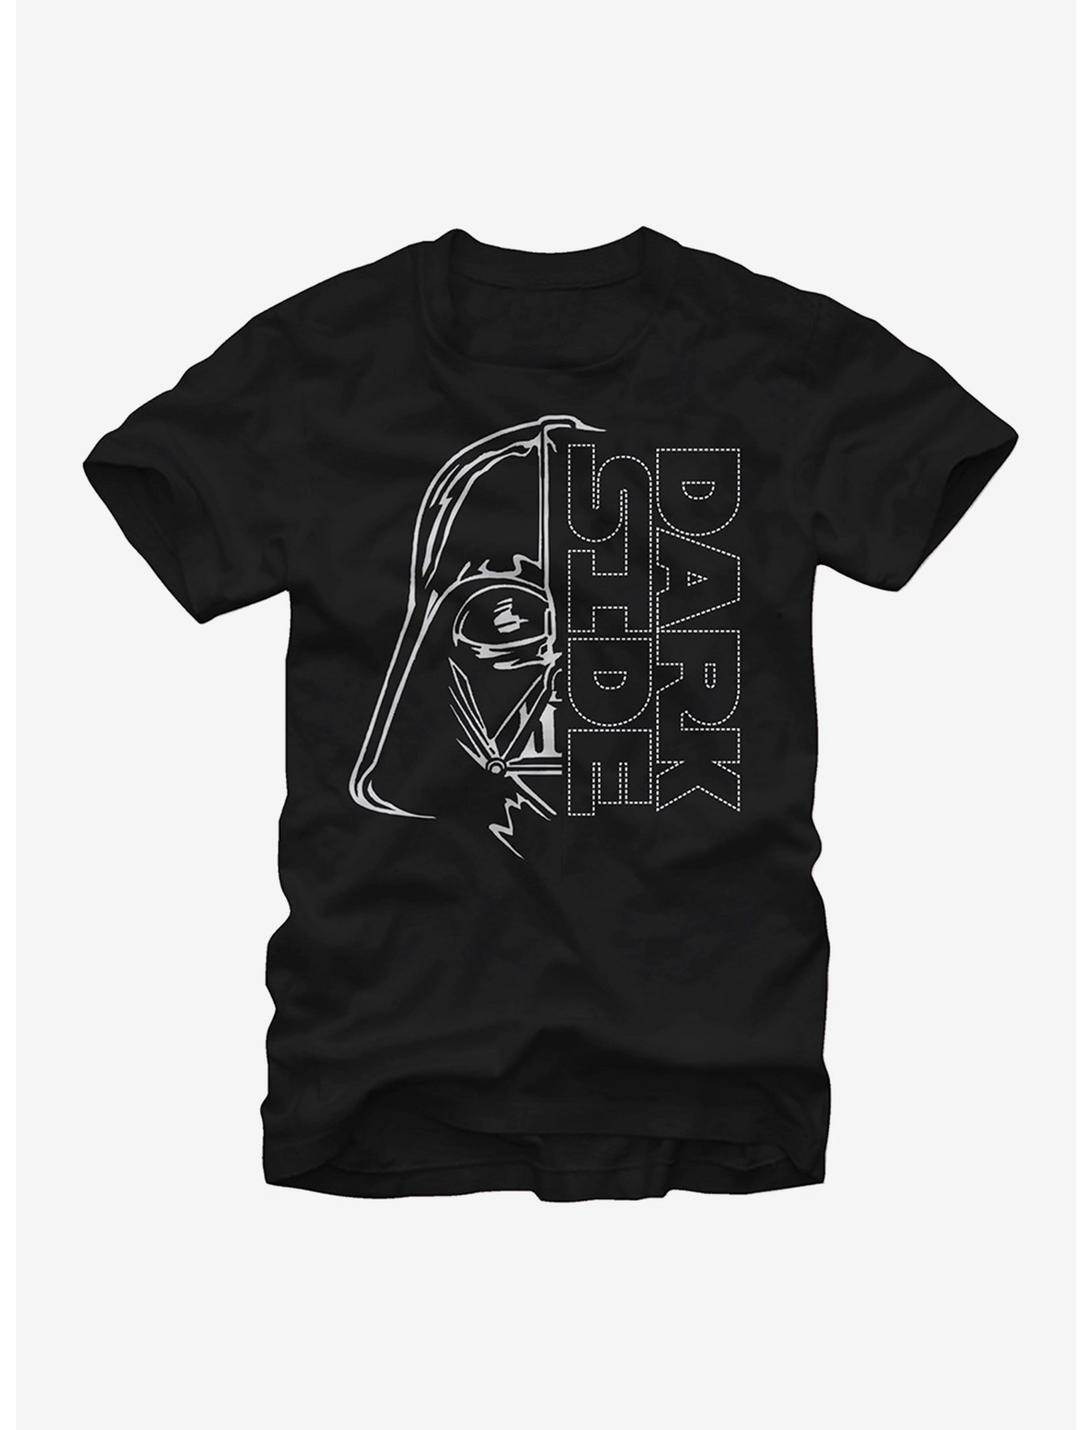 Star Wars Darth Vader Dark Side Two Face T-Shirt, BLACK, hi-res